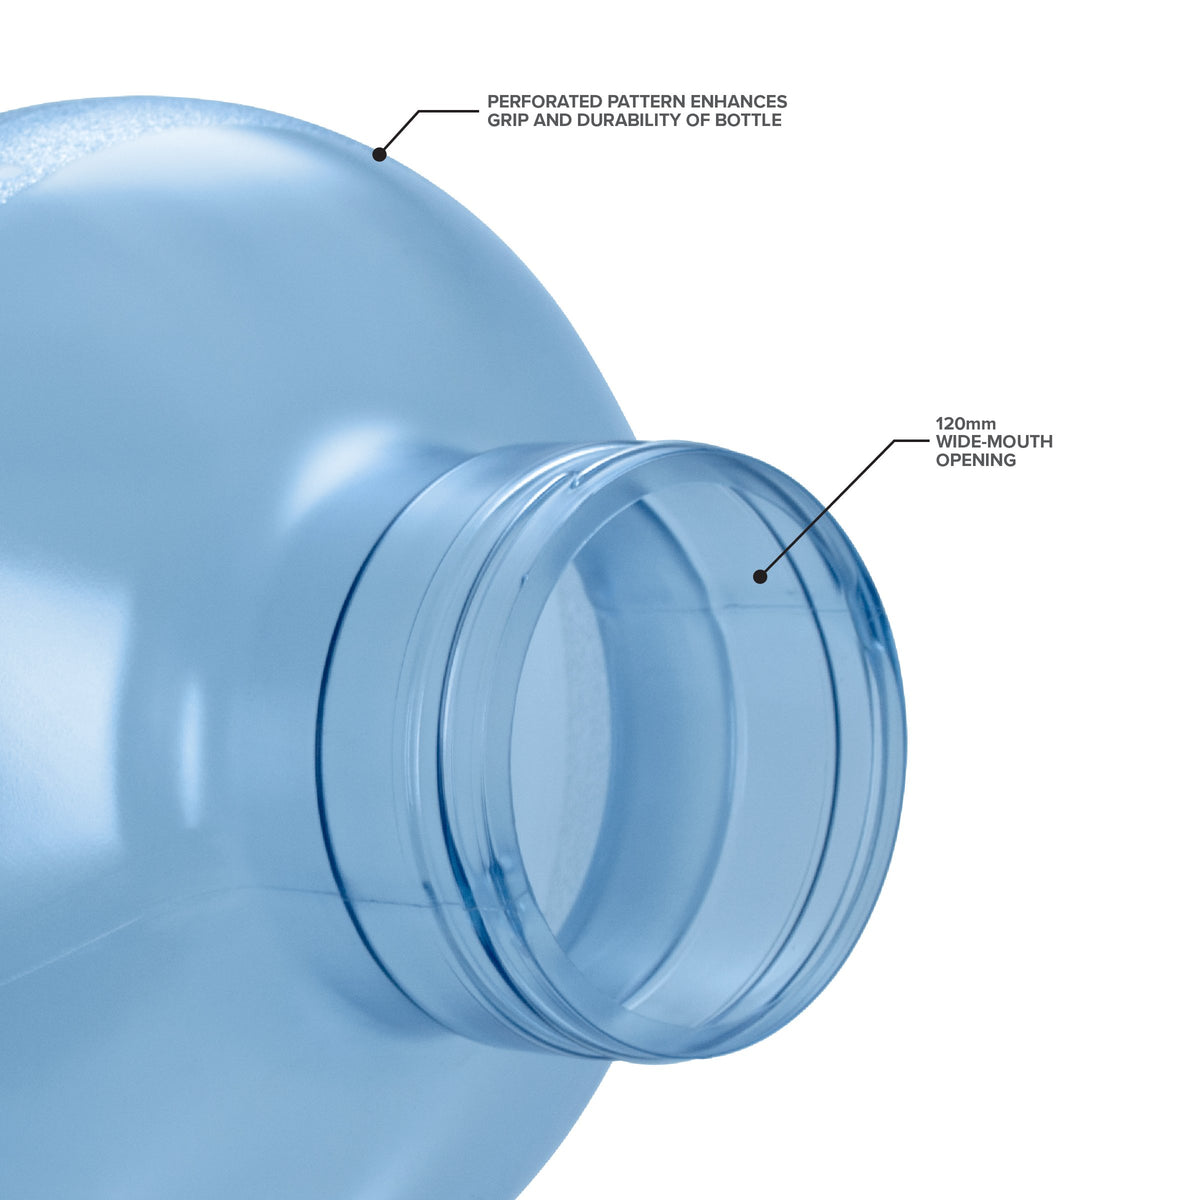 Brio 5 Gallon BPA-Free Water Bottle with Screw Cap - Blue